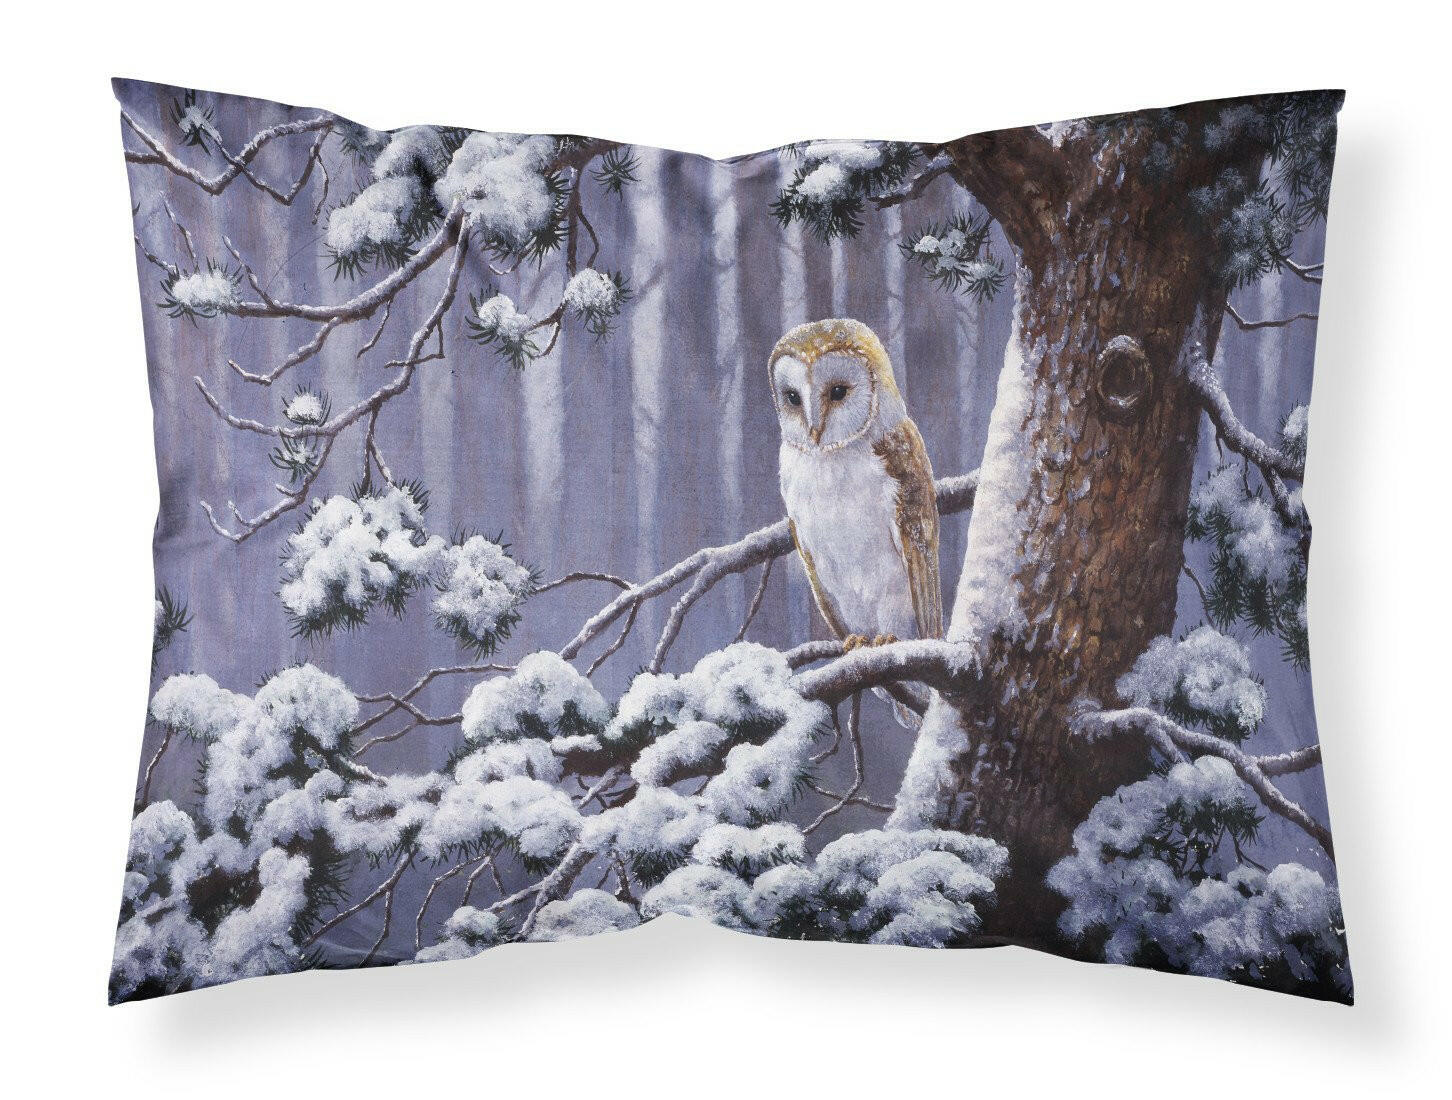 Owl on a Tree Branch in the Snow Fabric Standard Pillowcase BDBA0303PILLOWCASE by Caroline's Treasures